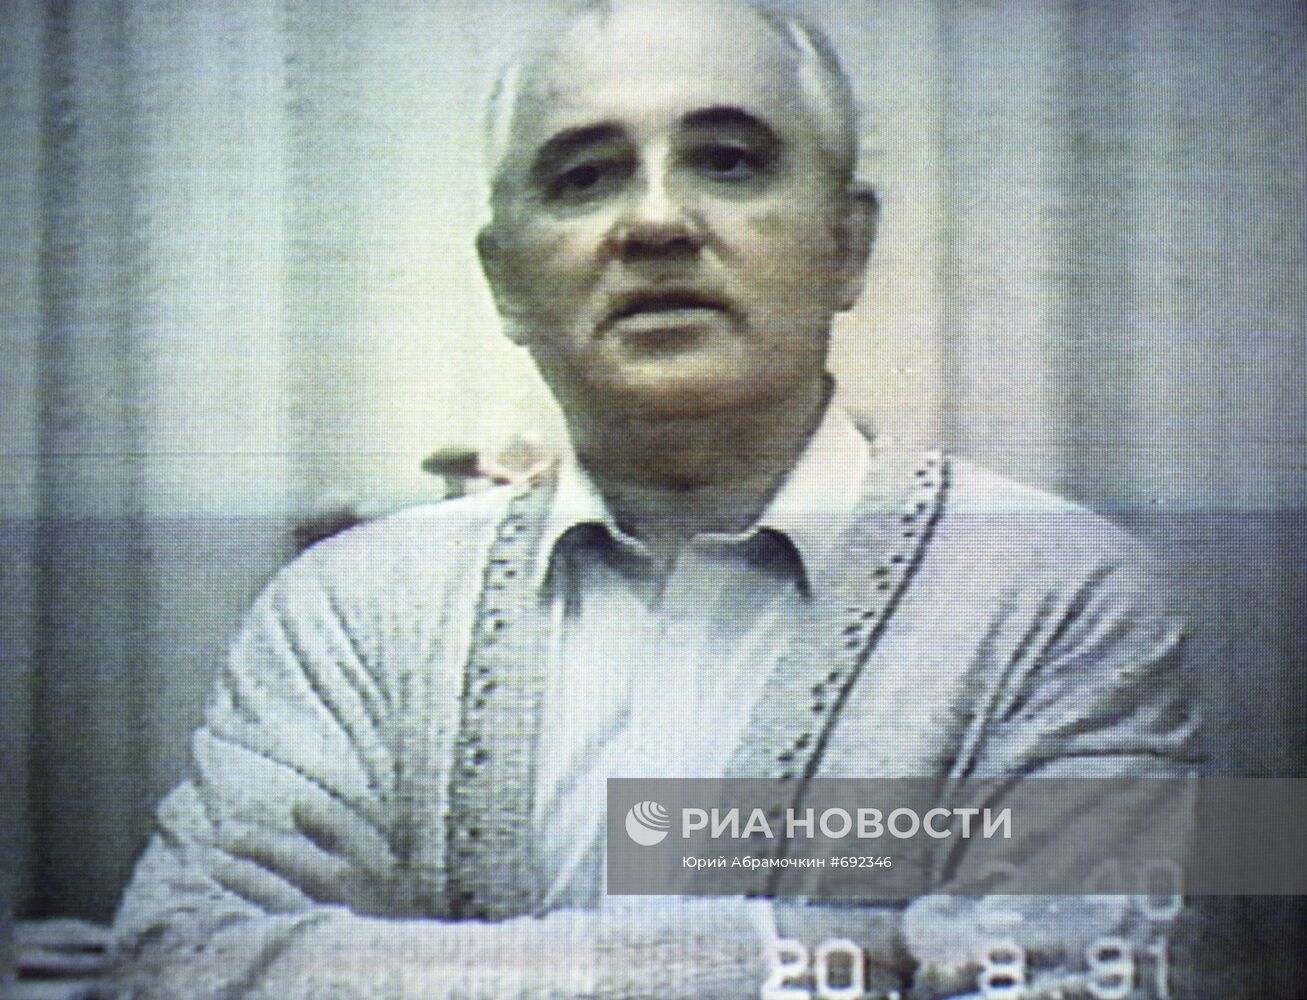 Кадр из видеообращения президента СССР М.С.Горбачева к народу